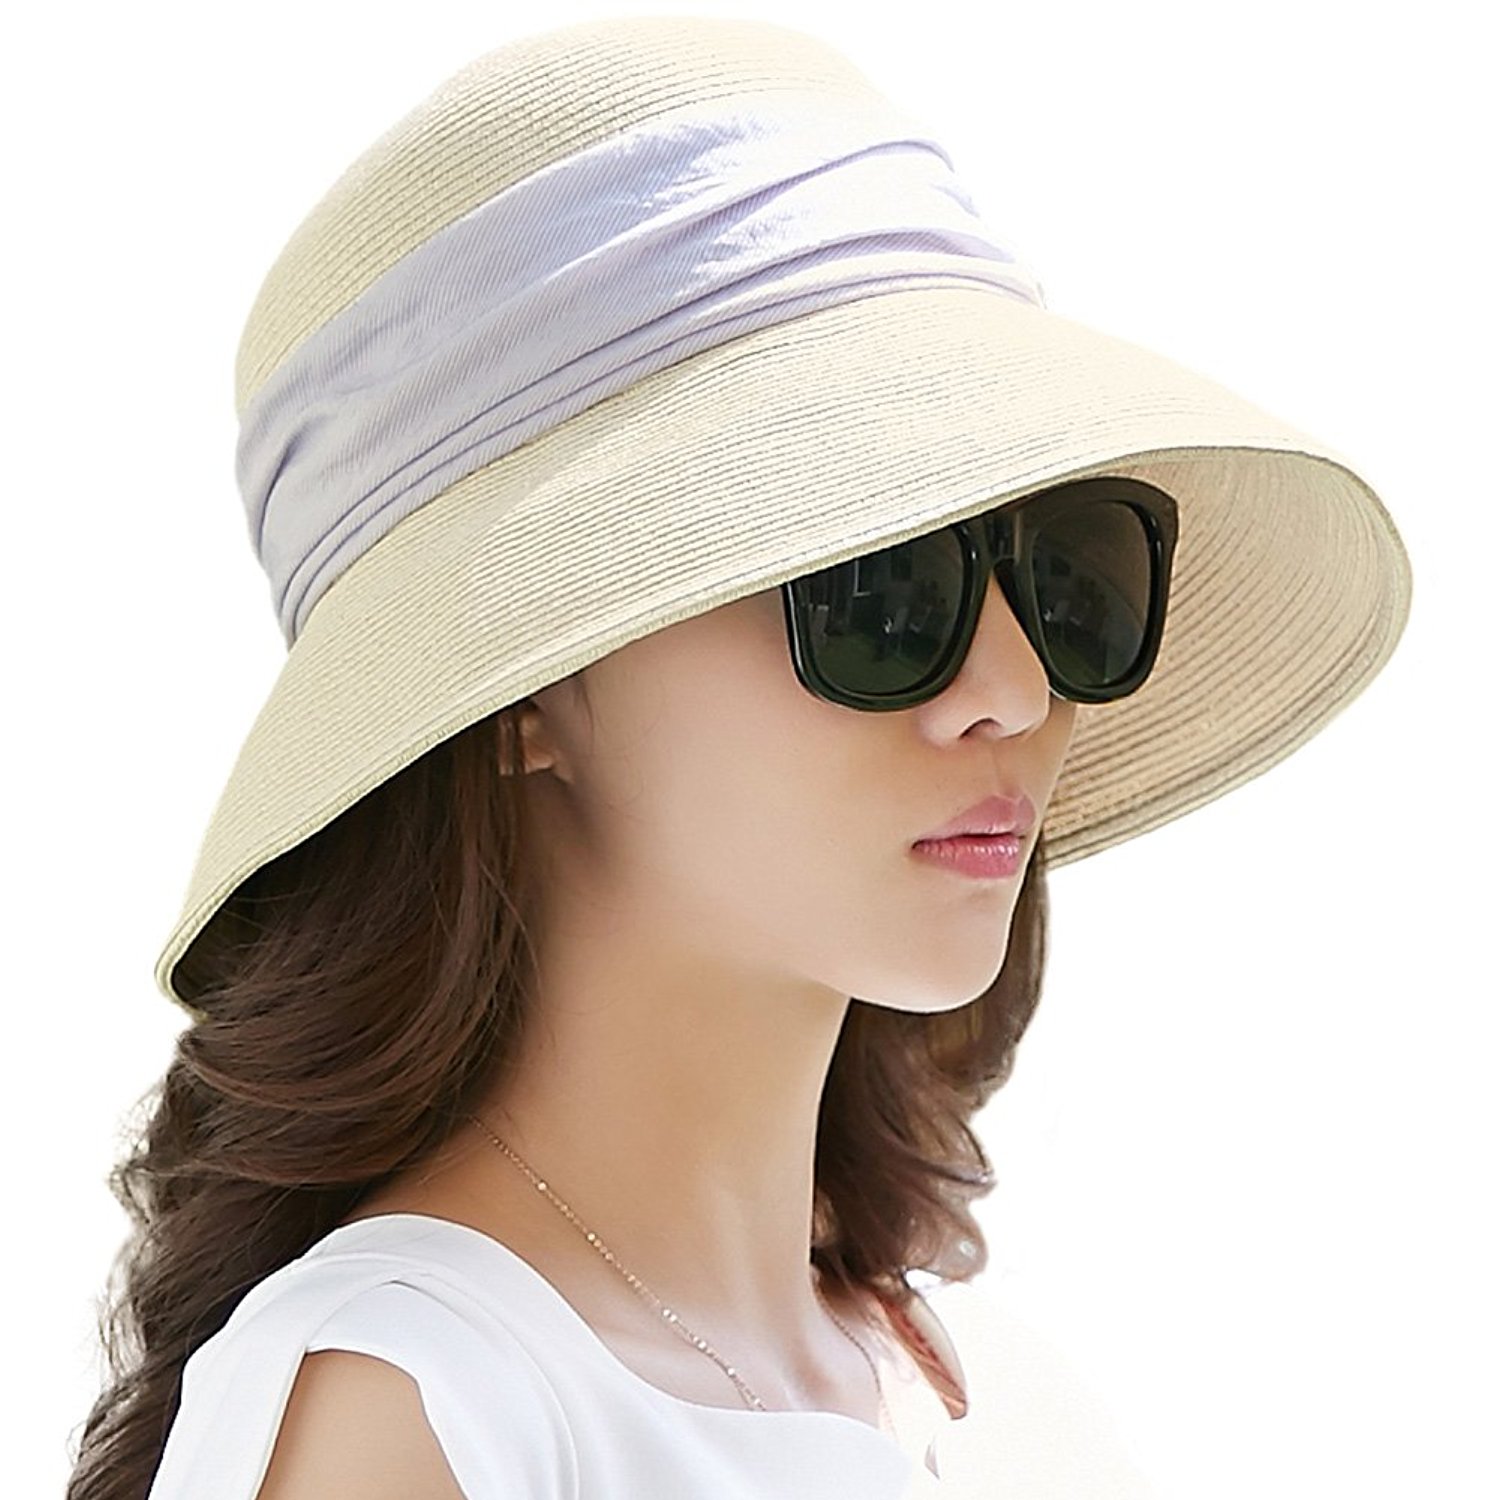 Betsey Johnson Women's Golden Hour Panama Hat at Amazon Women's ...